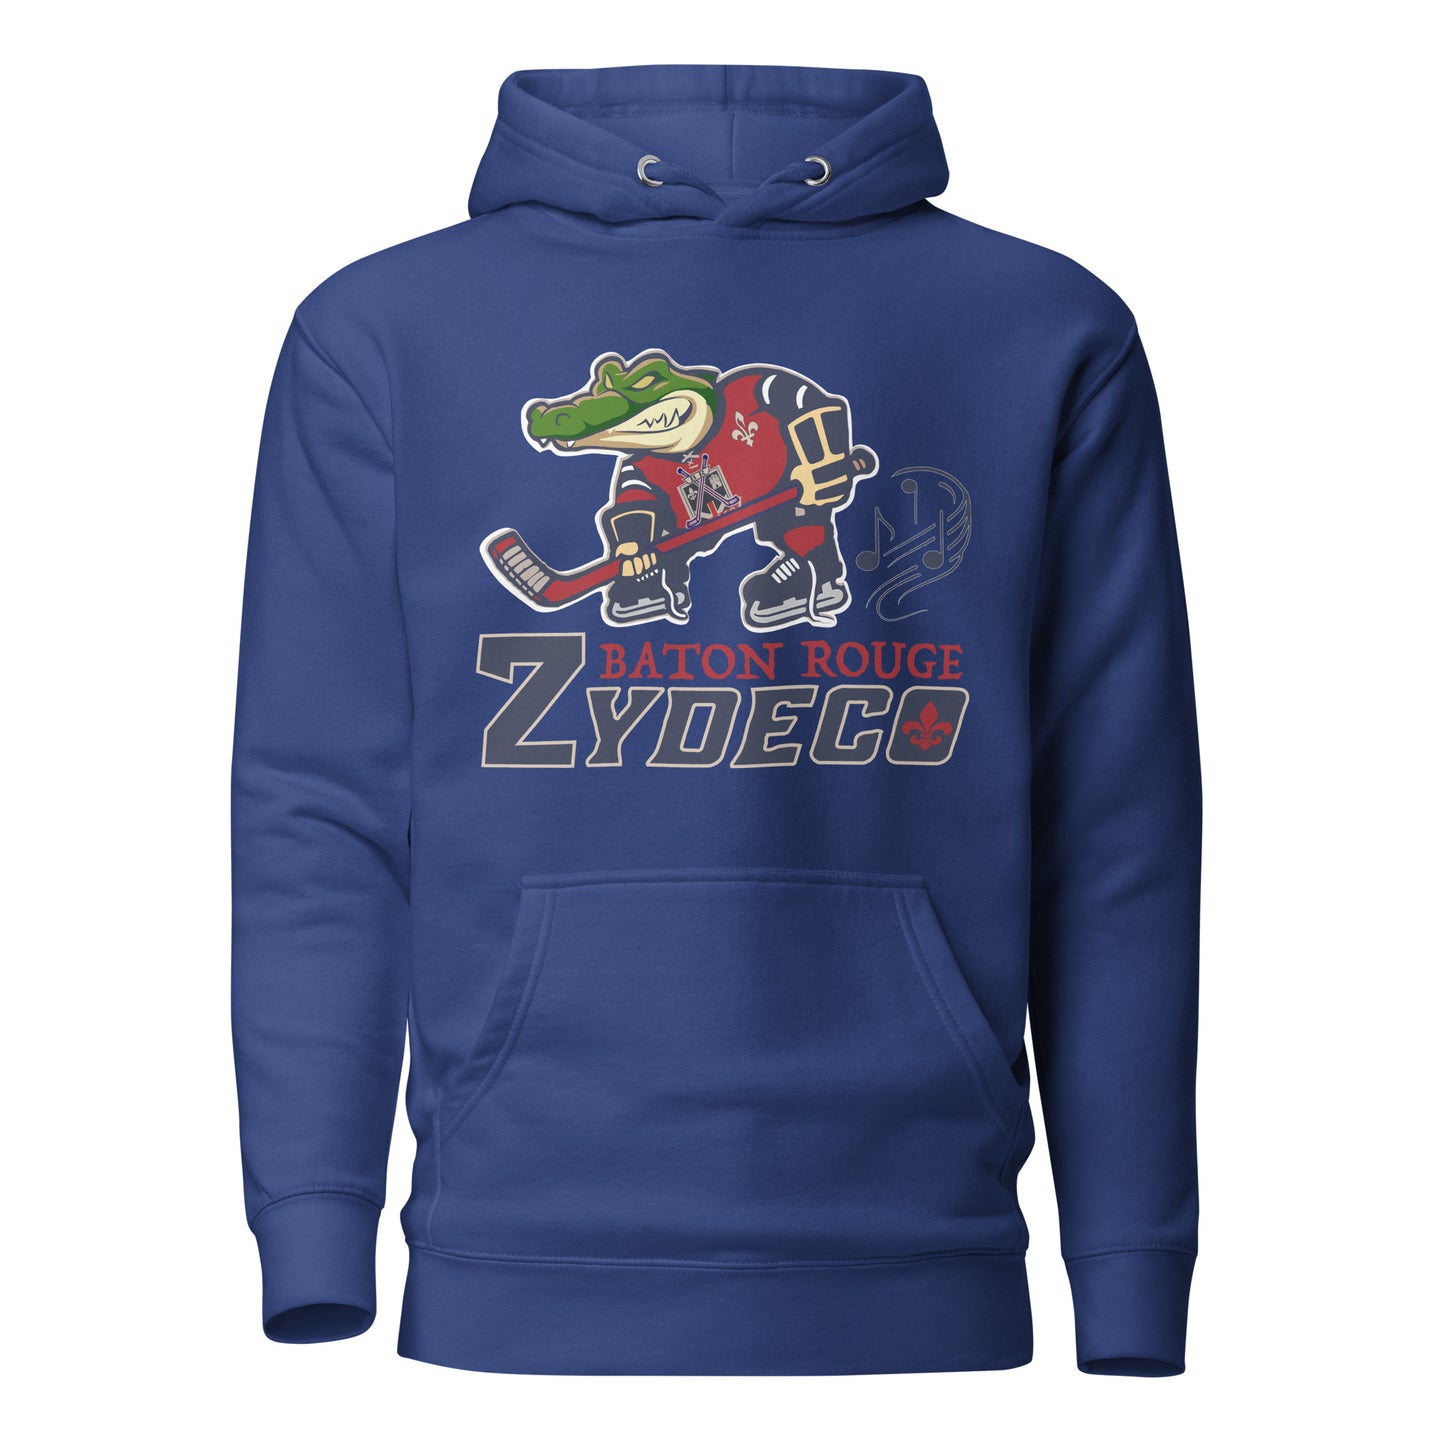 ZYDECO - AL LOGO FRONT / BADGE ON BACK - Unisex Hoodie